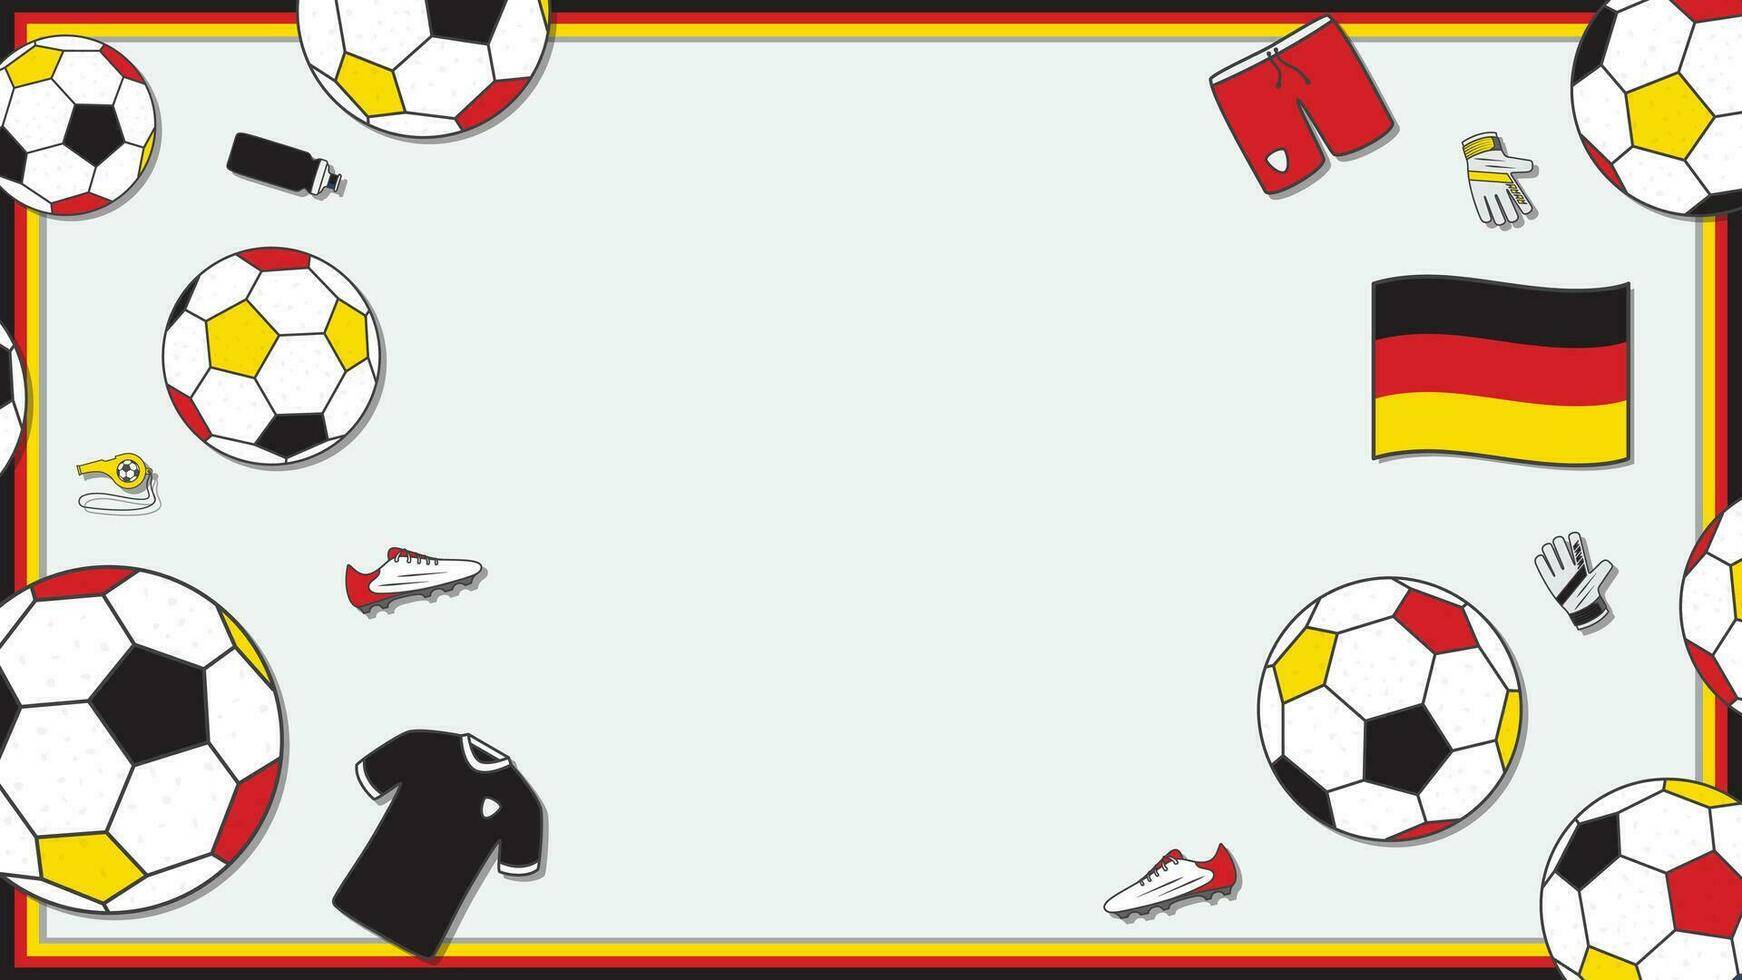 Football Background Design Template. Football Cartoon Vector Illustration. Sport In Germany